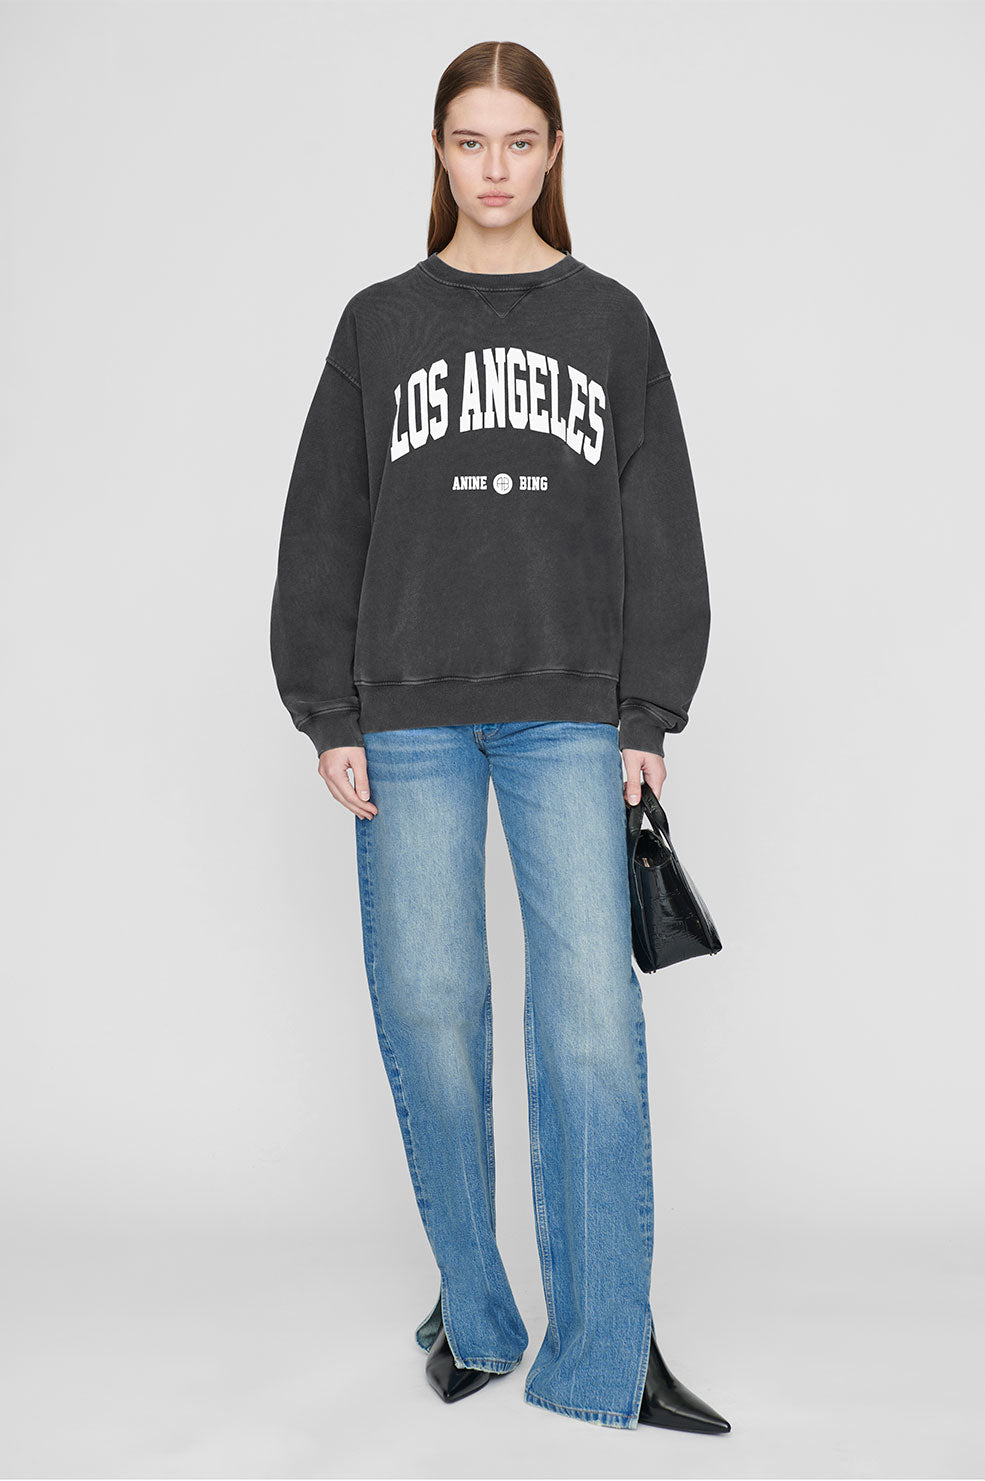 Ramona Sweatshirt Los Angeles - Washed Black